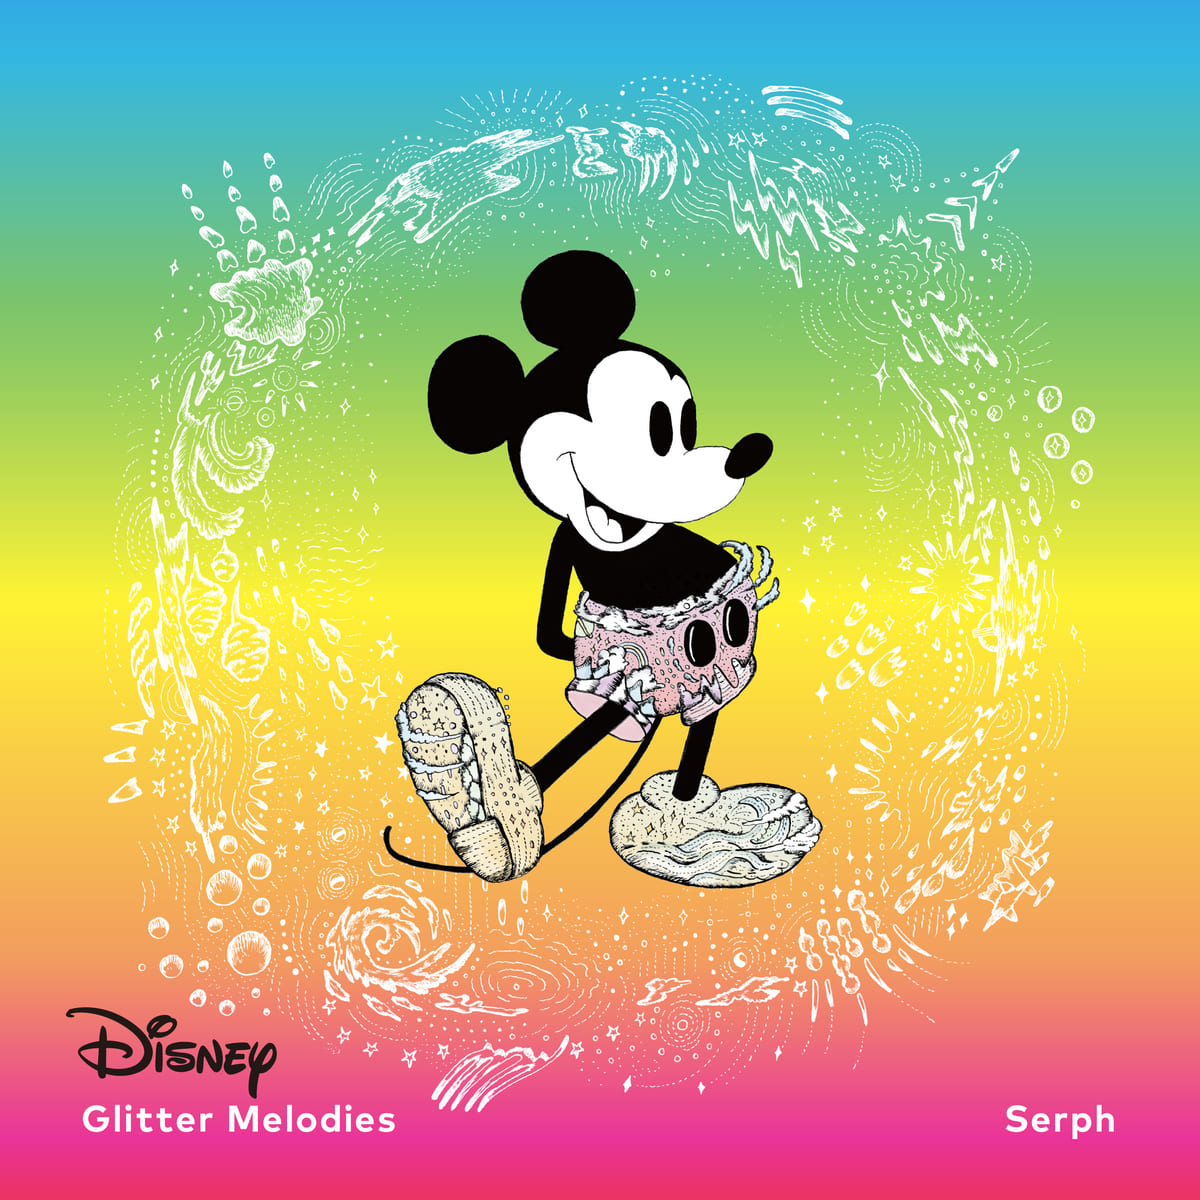 Serph『Disney Glitter Melodies』